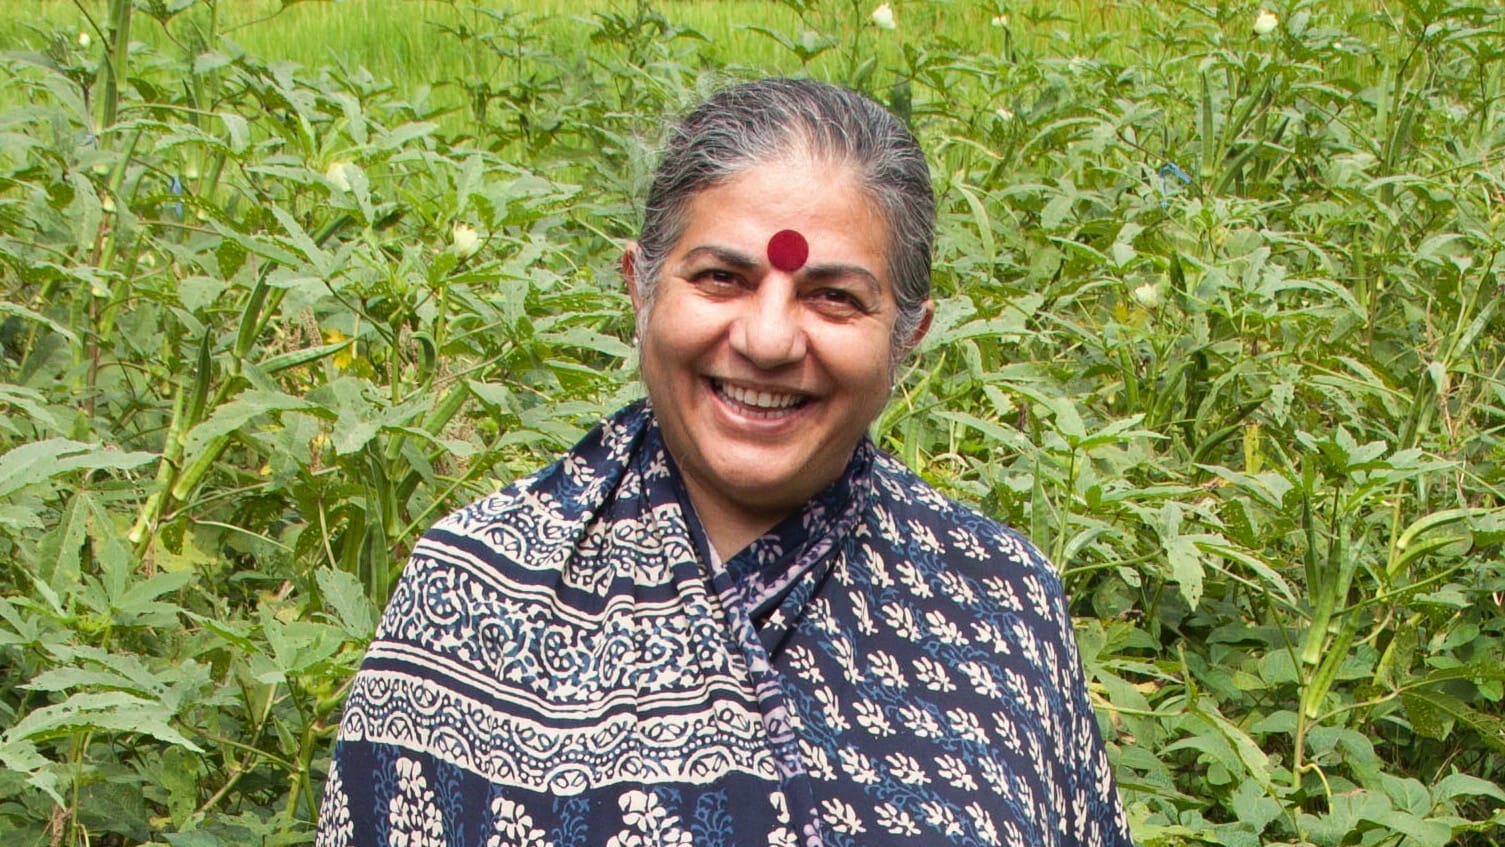 Vandnana Shiva Fights Patents on Seeds